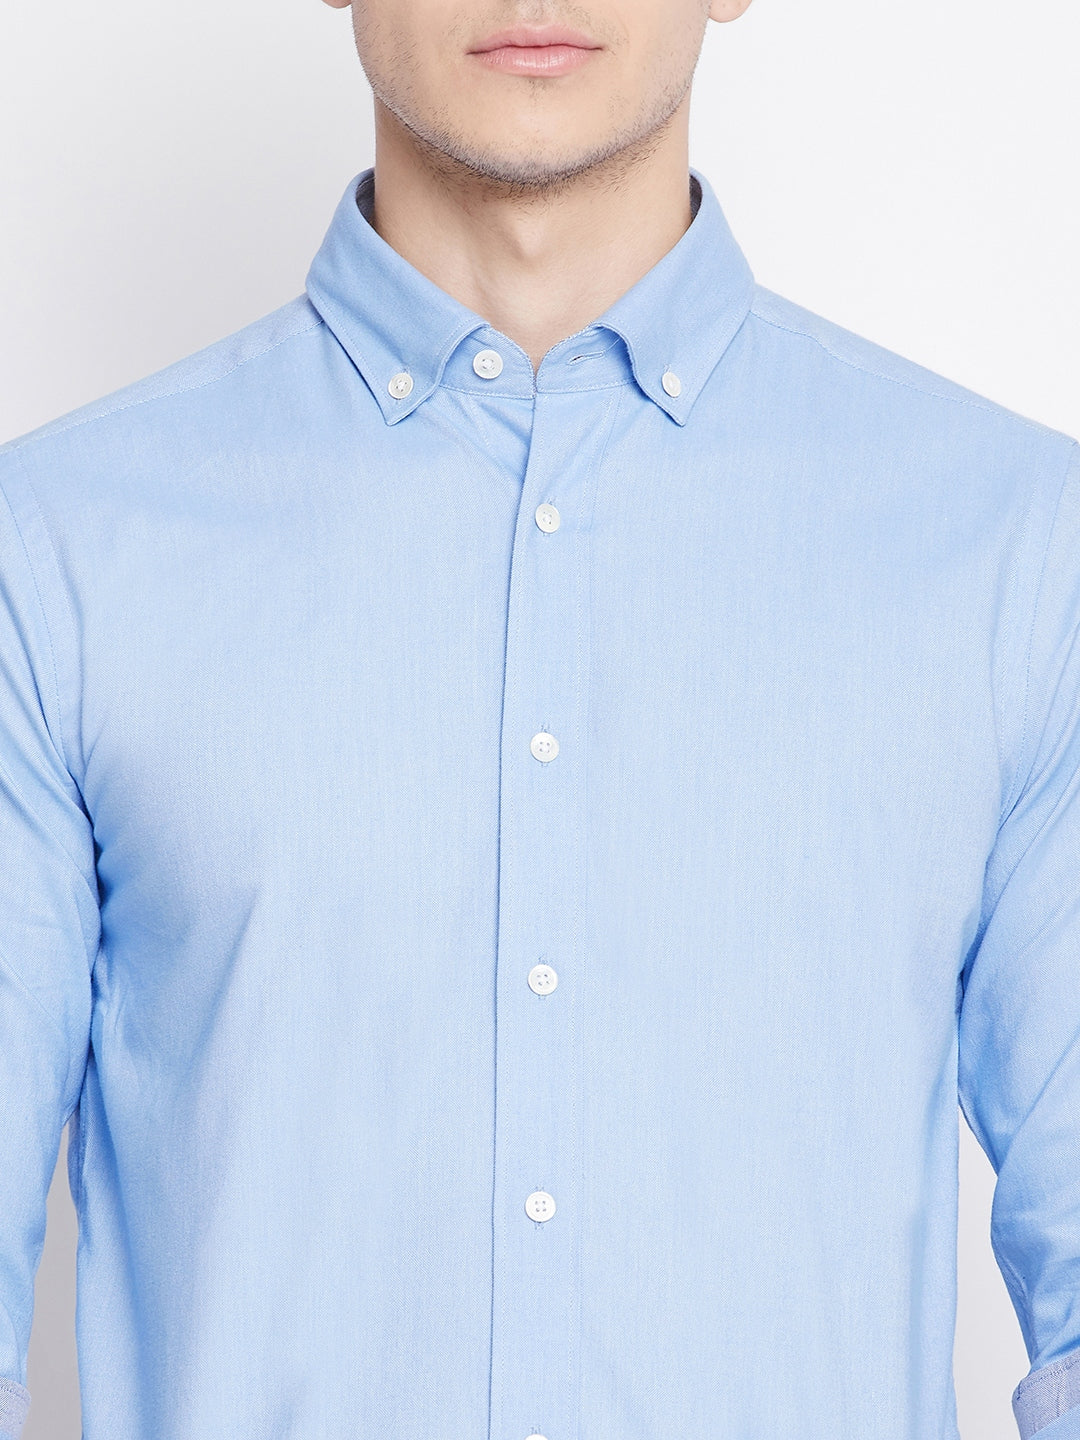 Sky Blue Oxford Cotton Shirt